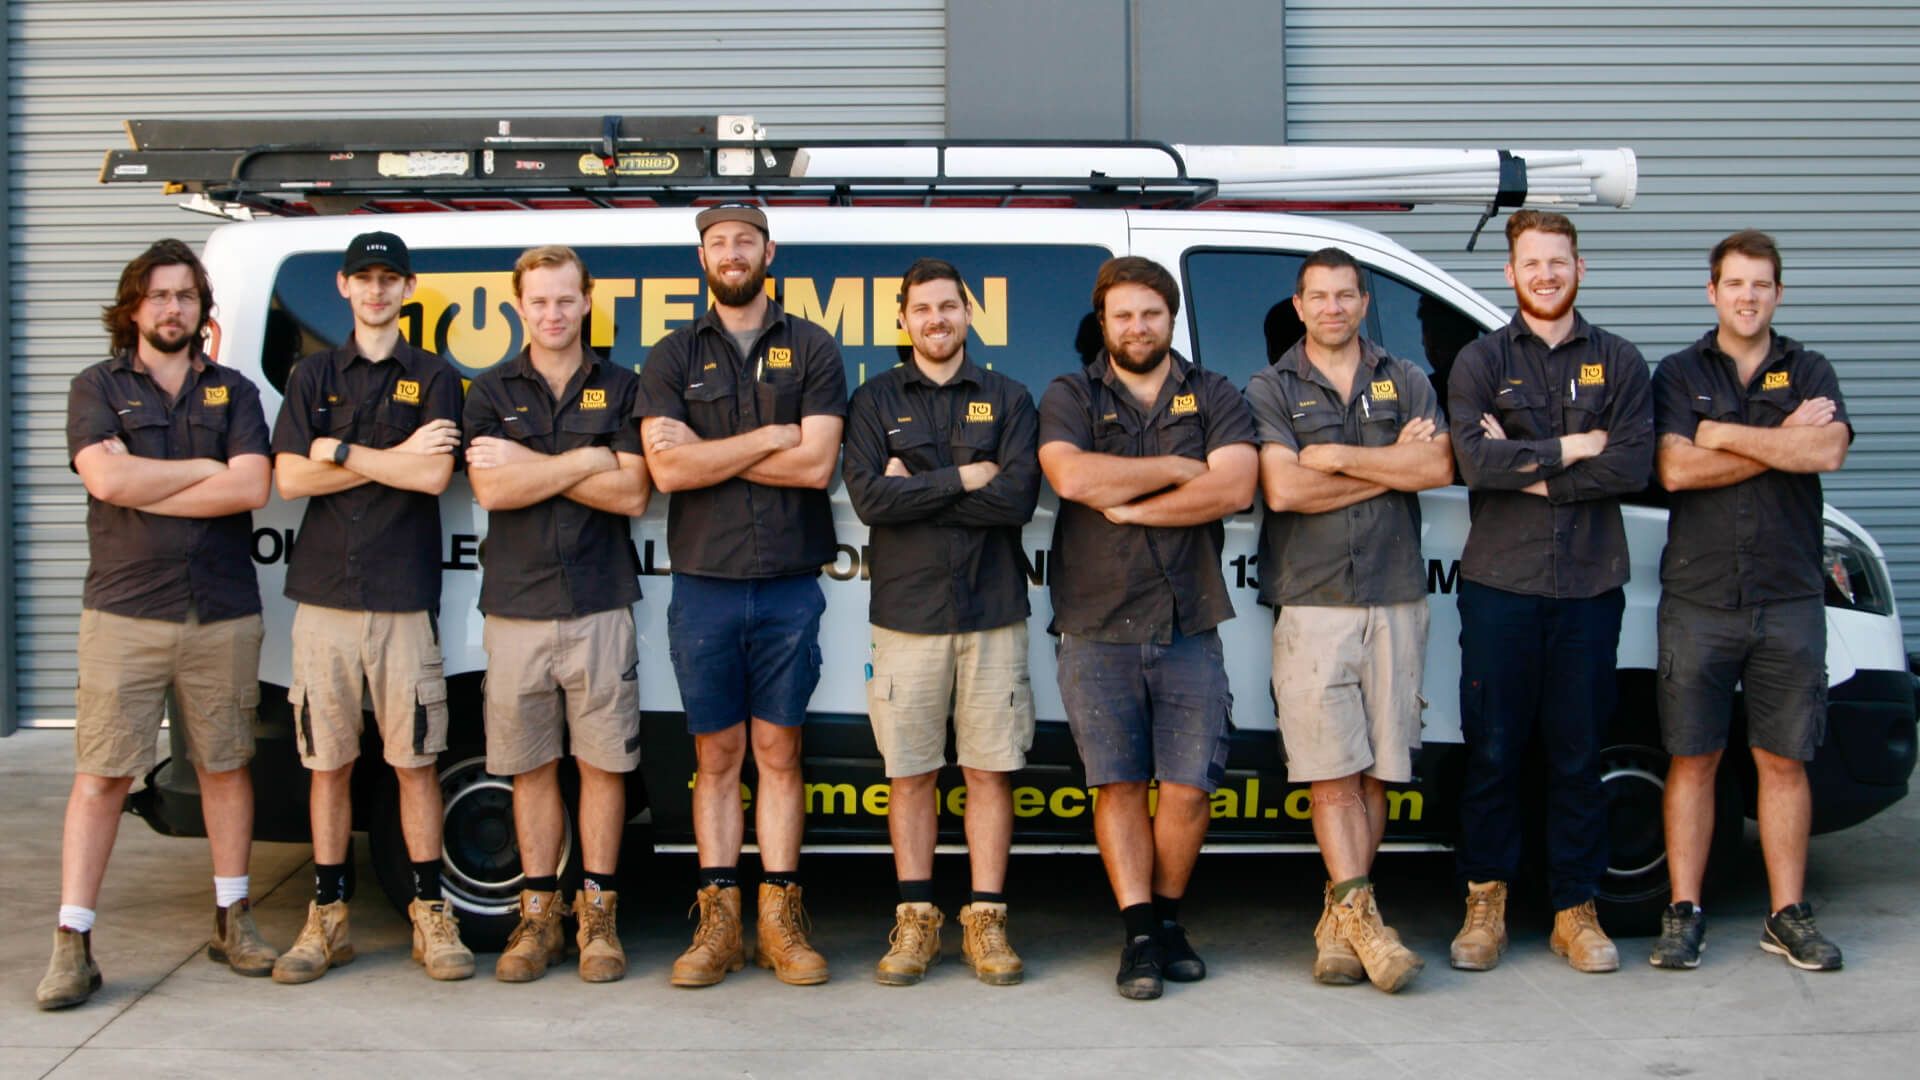 The team of Noosa electricians standing in front of the working van.